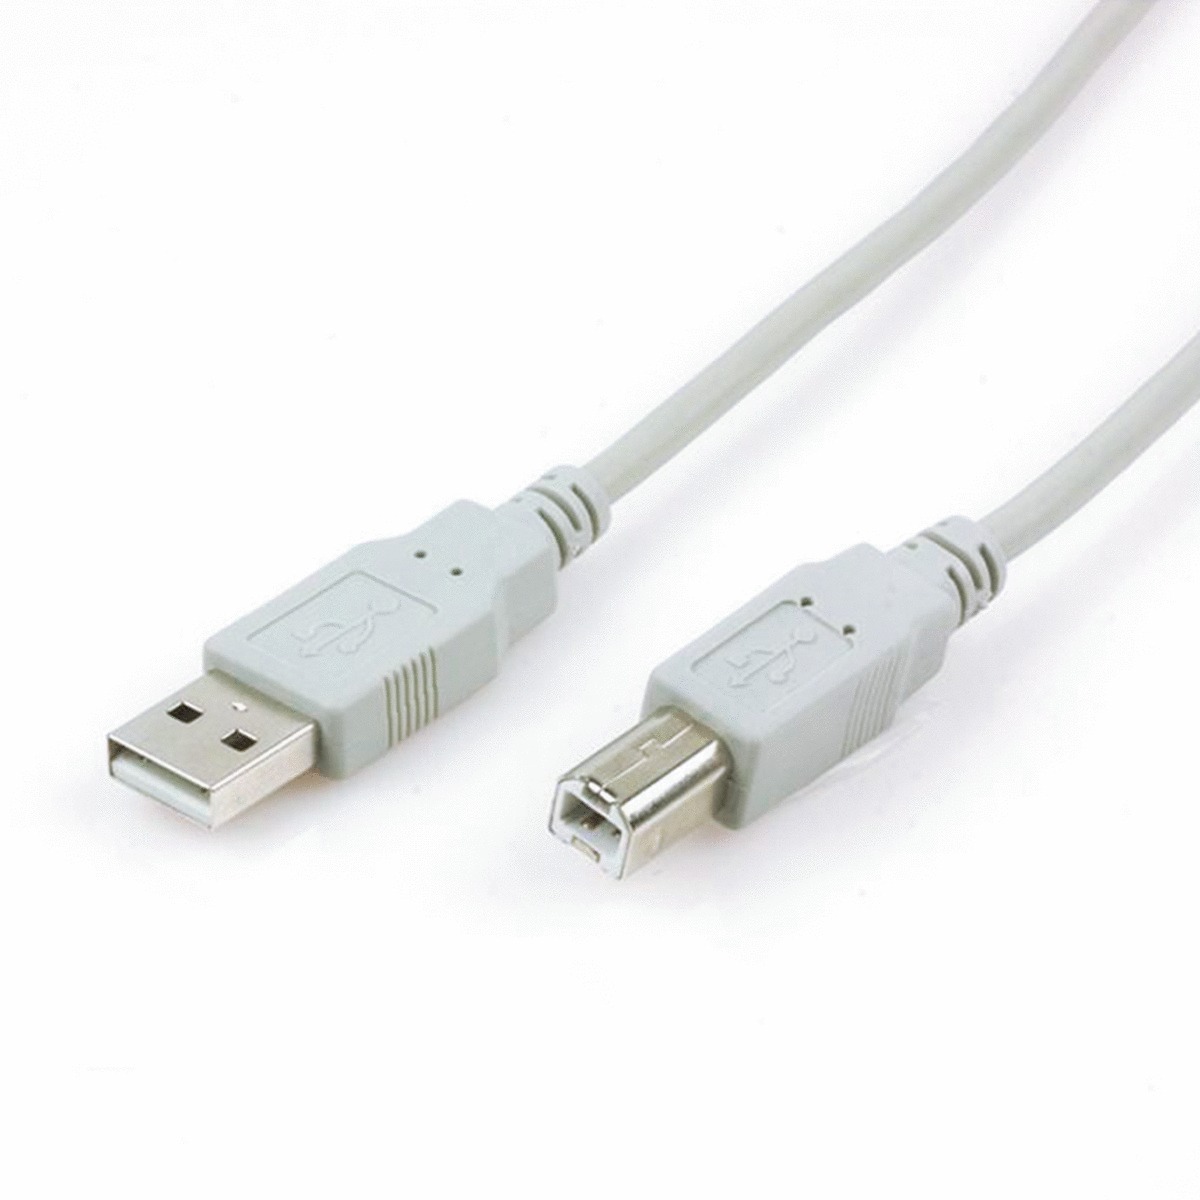 CABLE USB XTECH XTC-302